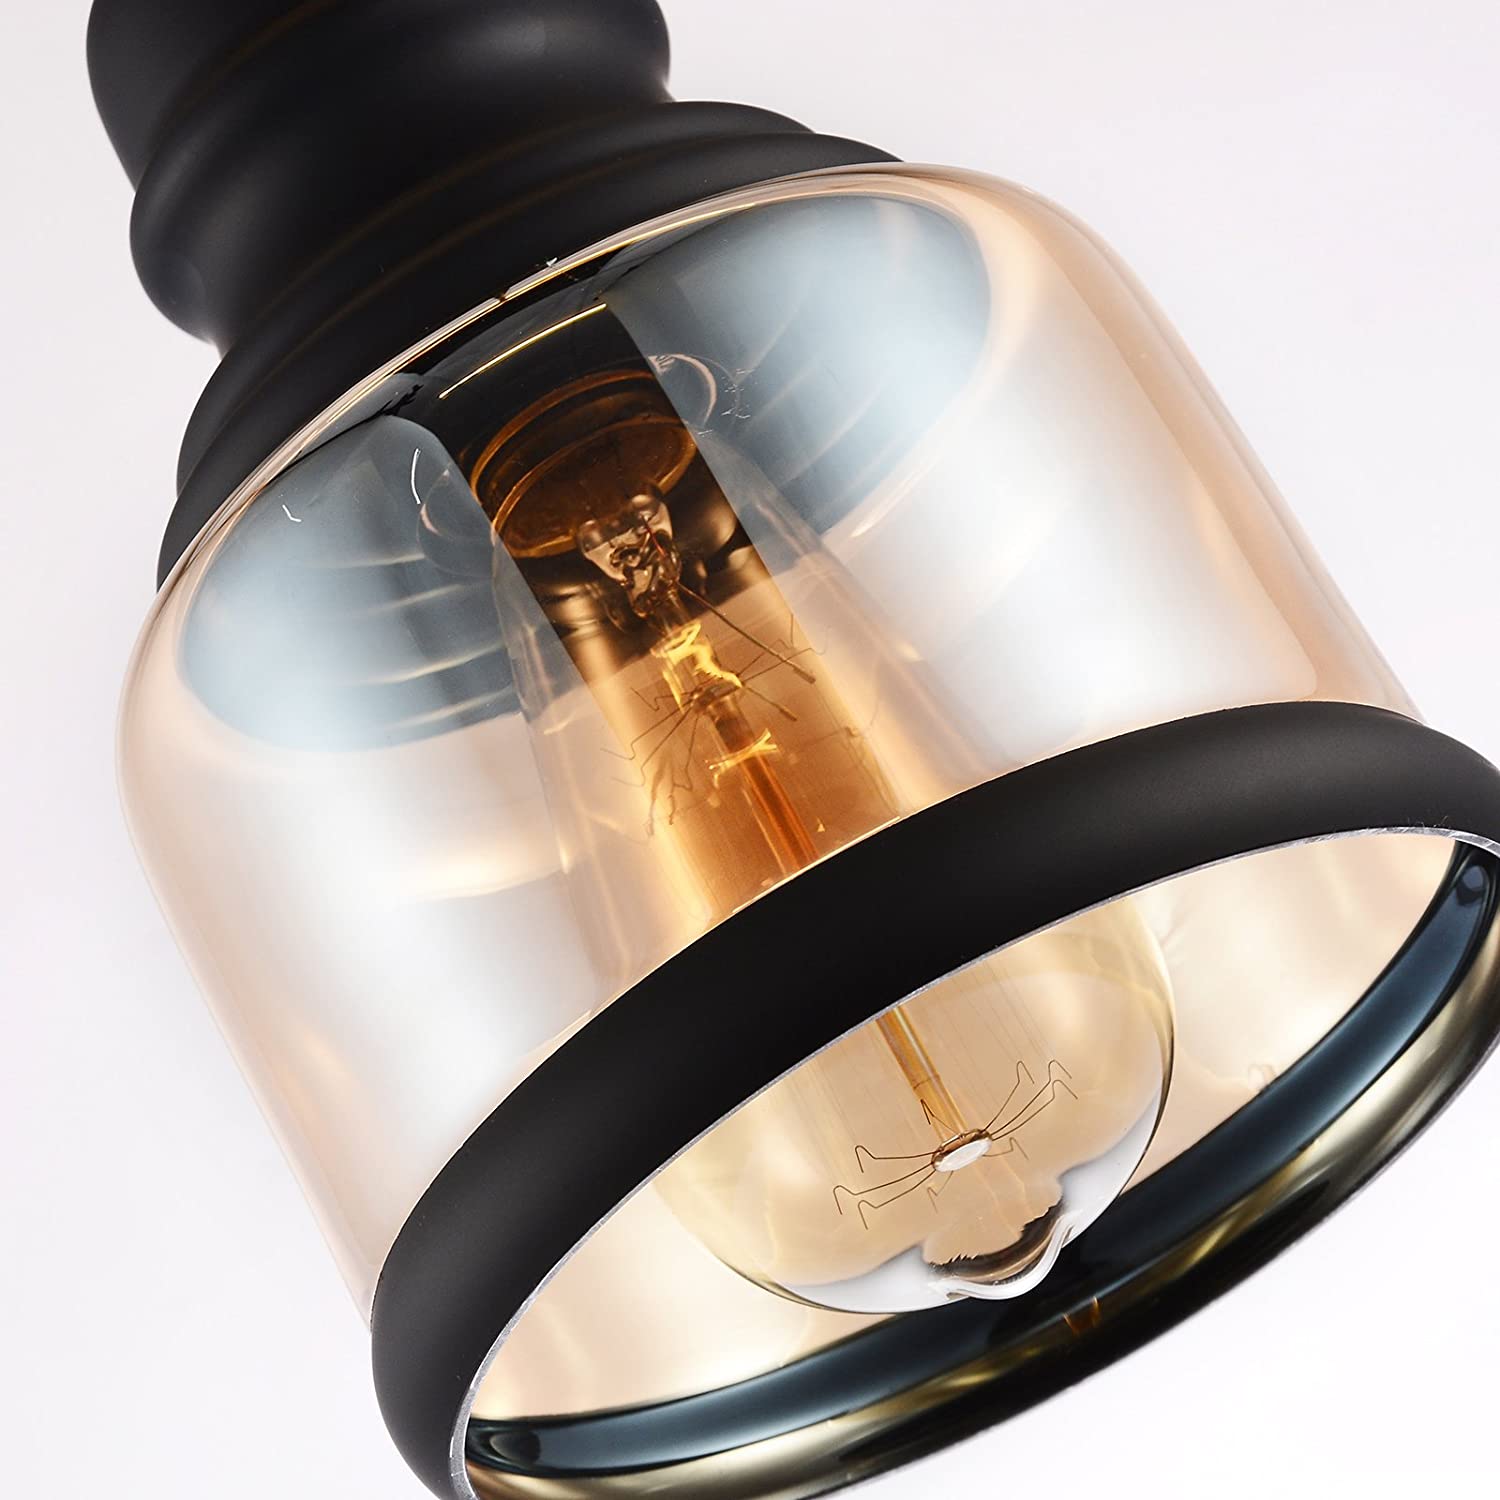 Vintage industrial On/off dimmer switch jar glass plug in black pendant light